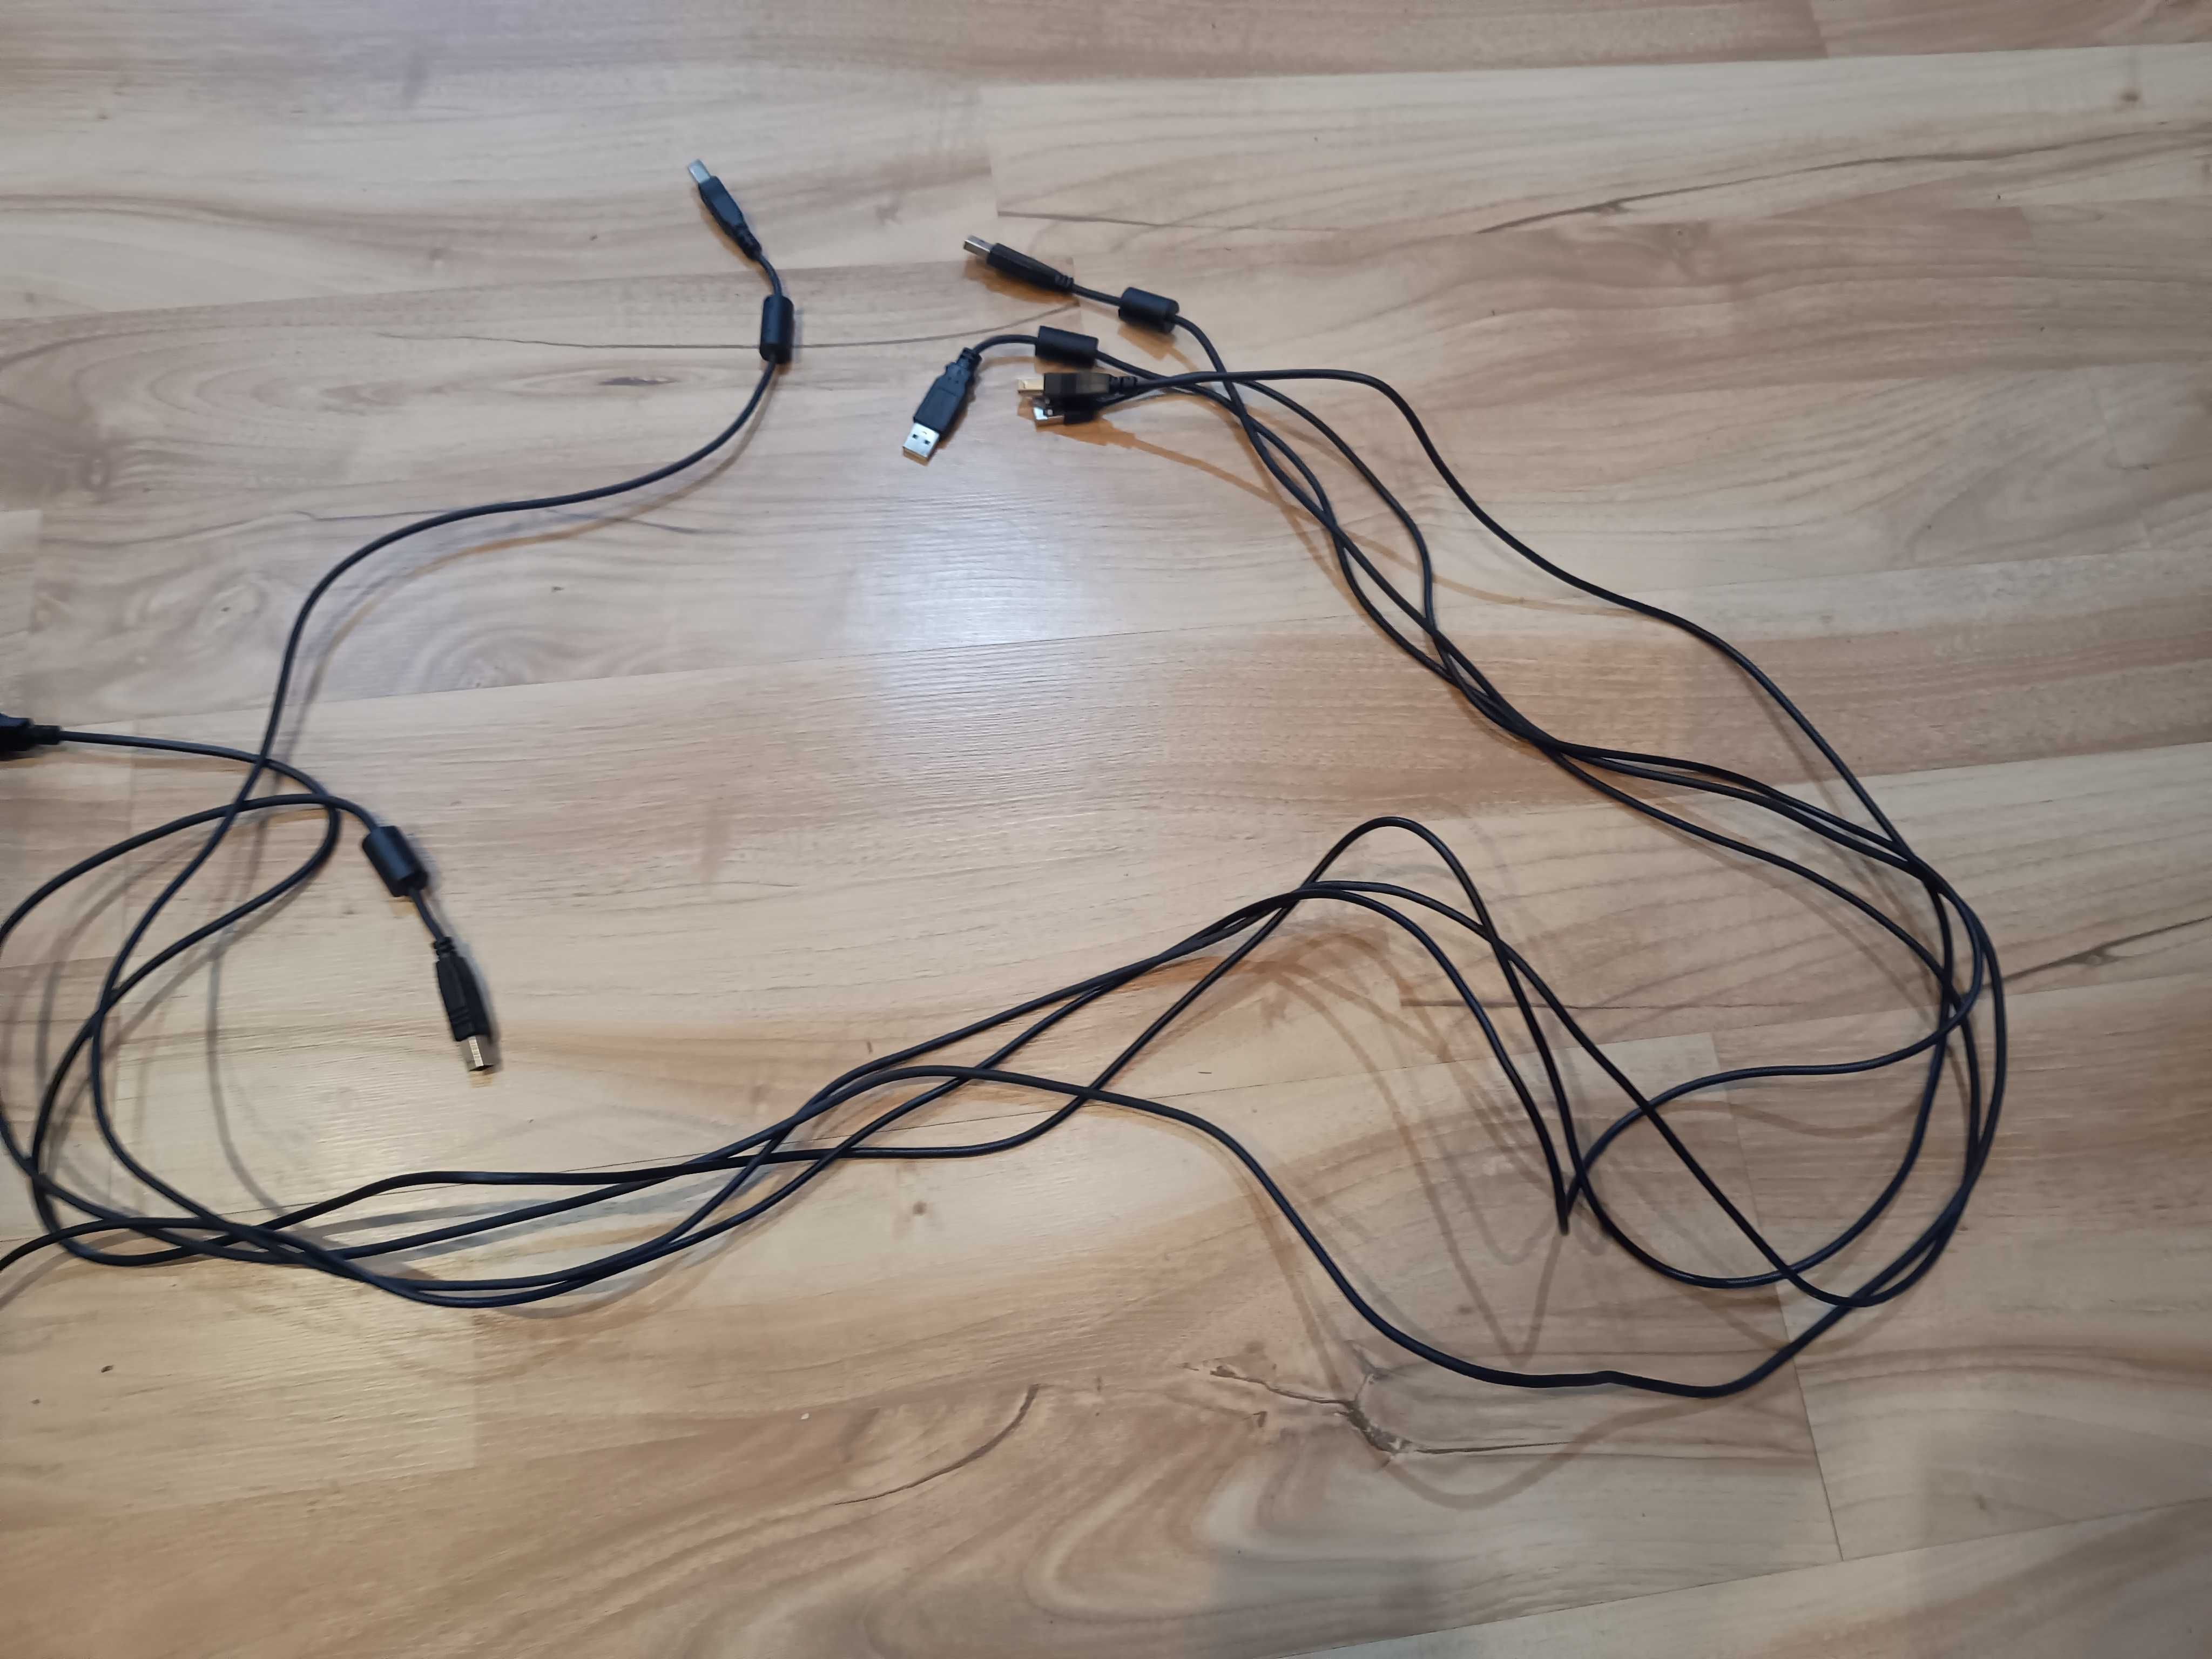 4szt kabel przewód do drukarki 1.2m 1.5m